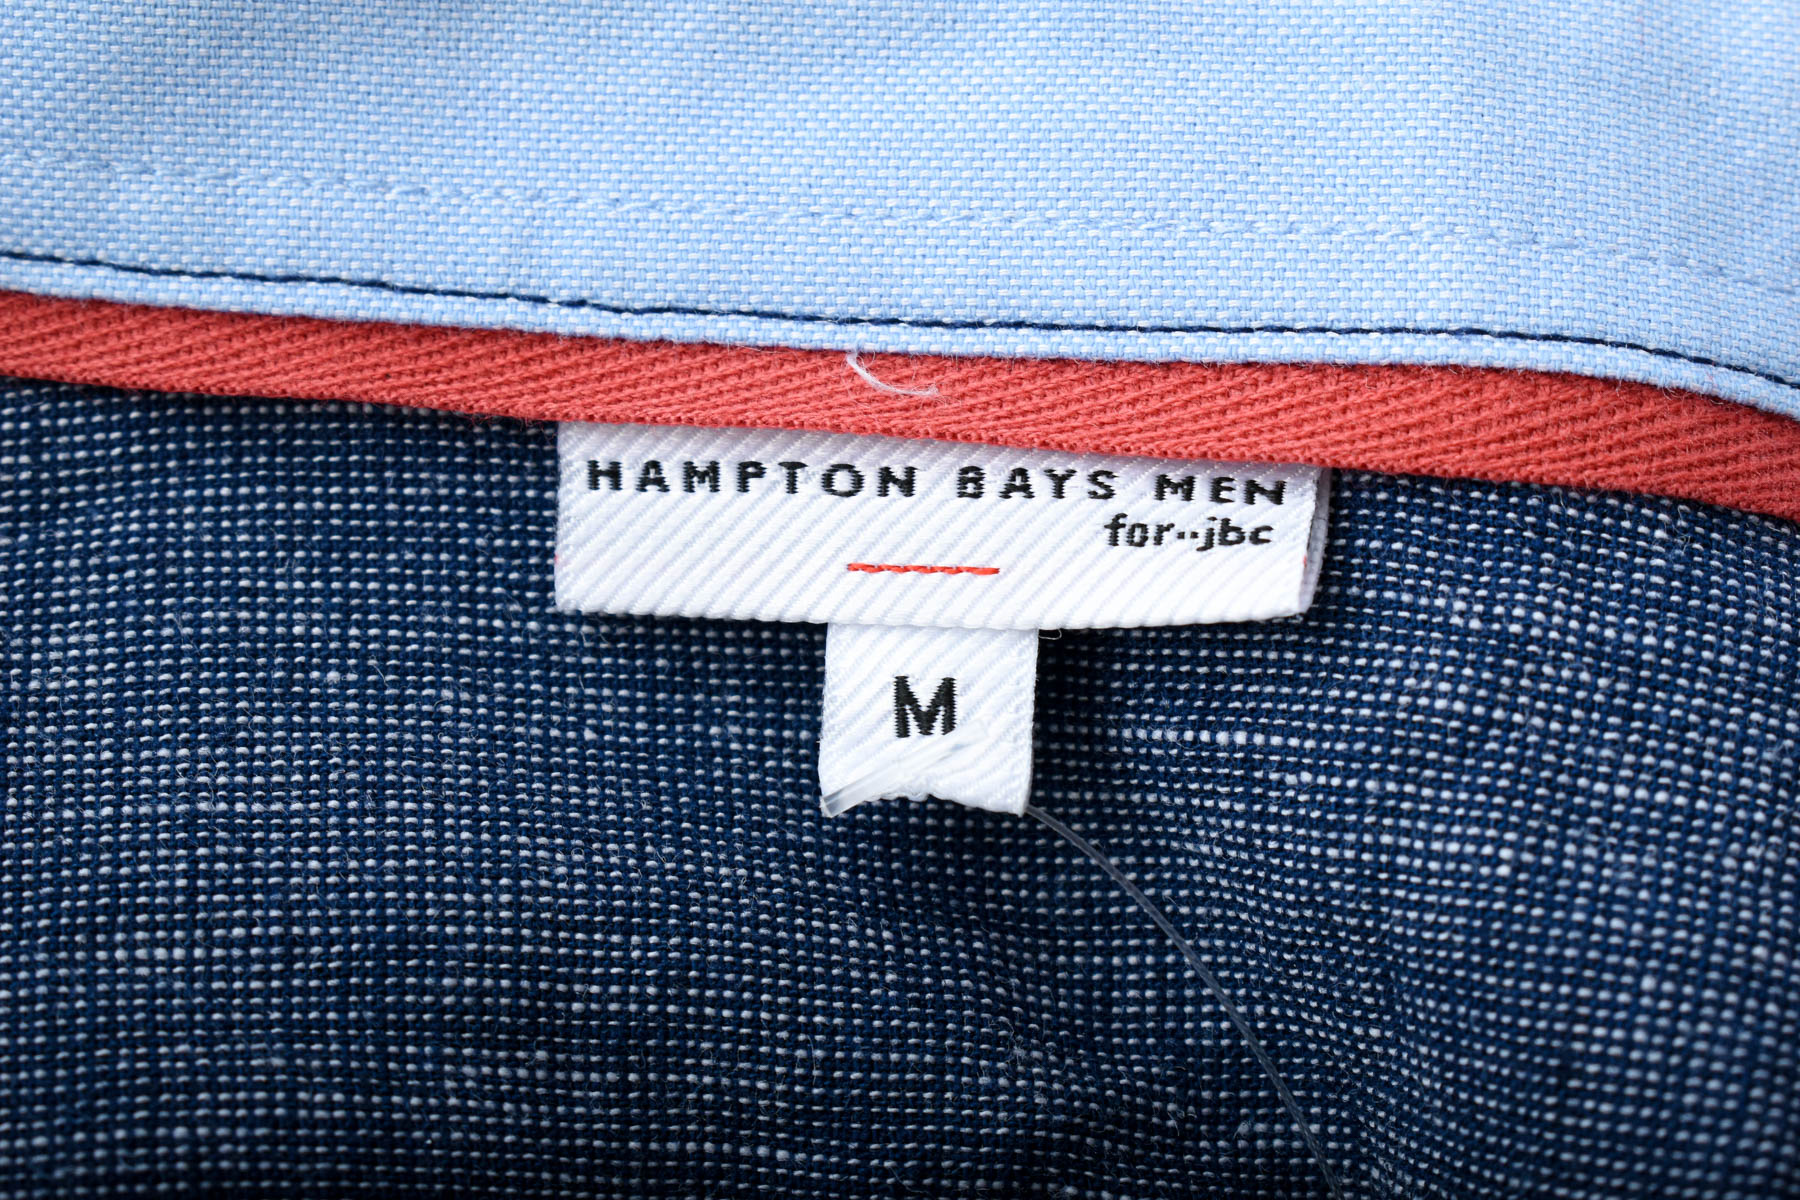 Men's shirt - HAMPTON BAYS MEN for jbc - 2